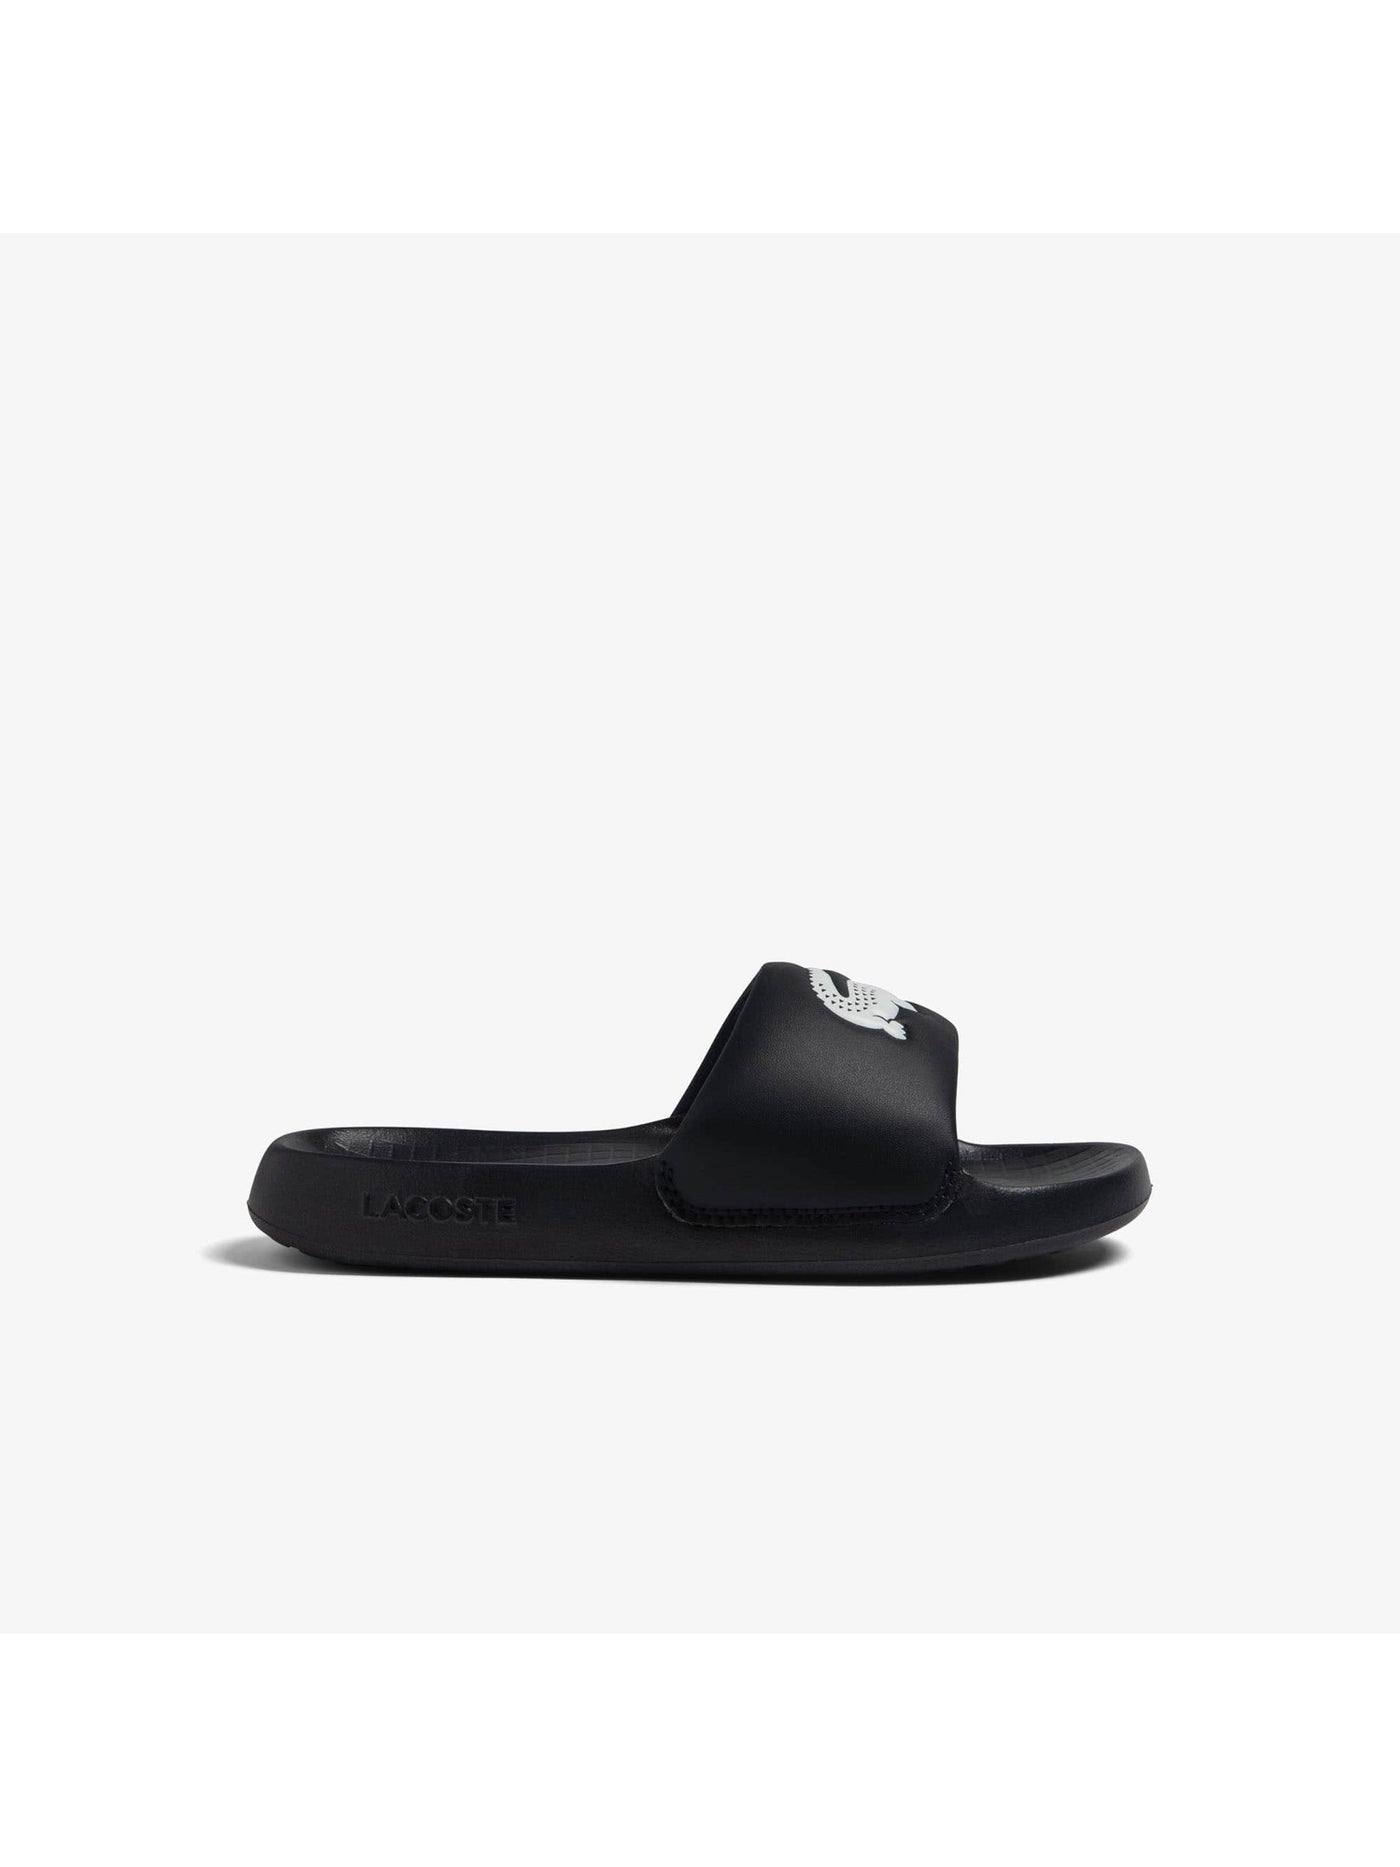 LACOSTE Mens Black Cushioned Croco 2.0 Open Toe Slip On Slide Sandals Shoes 7 M